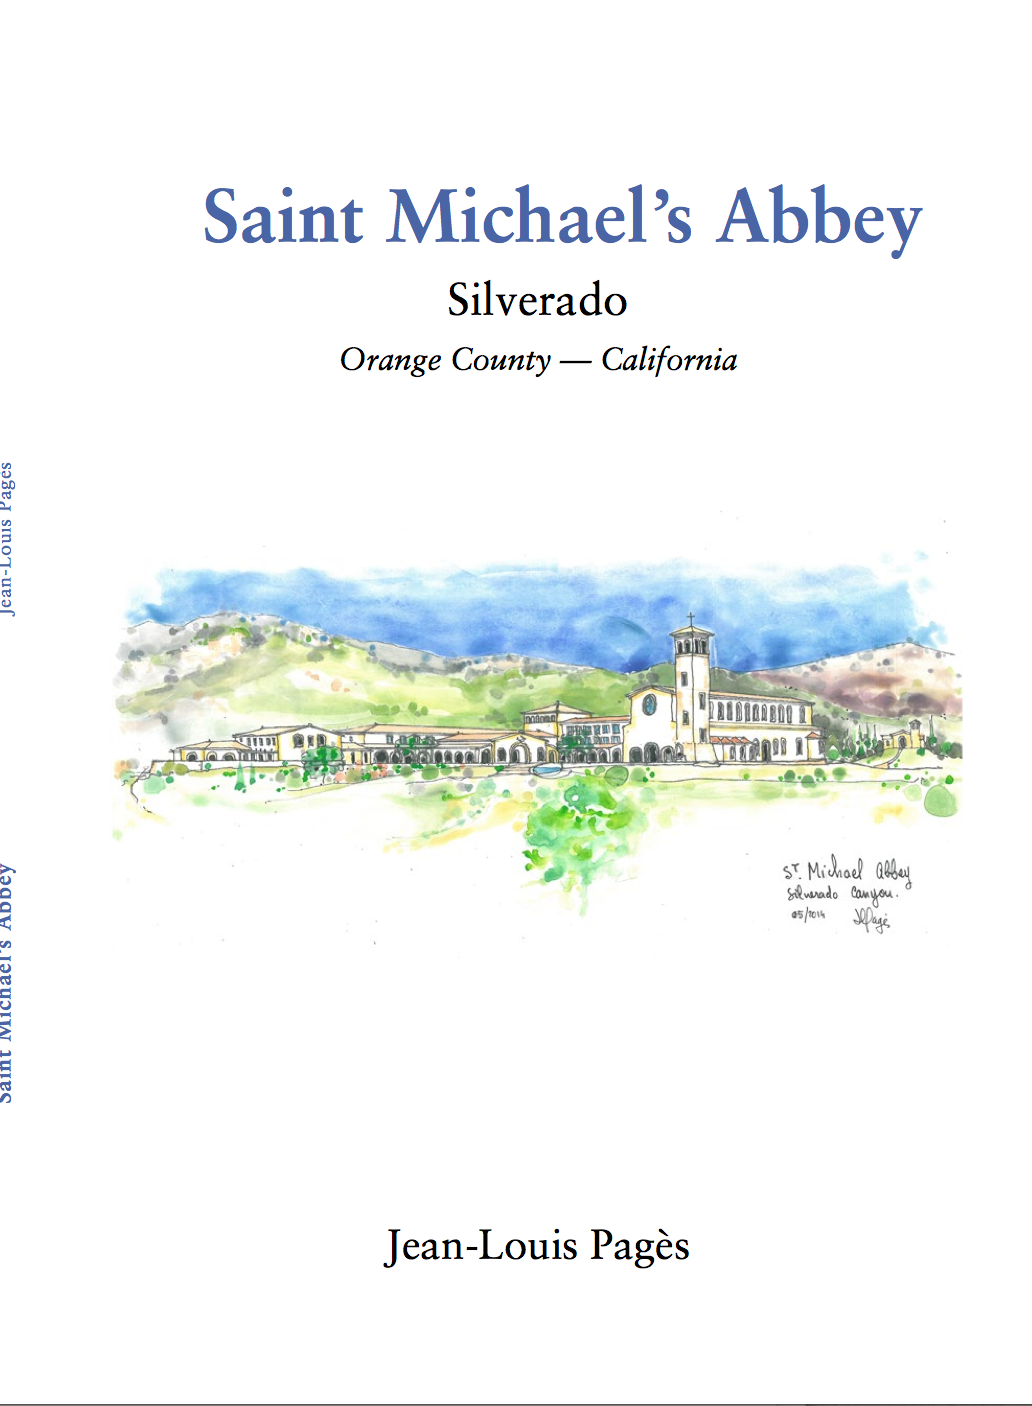 Saint Michael's Abbey 1